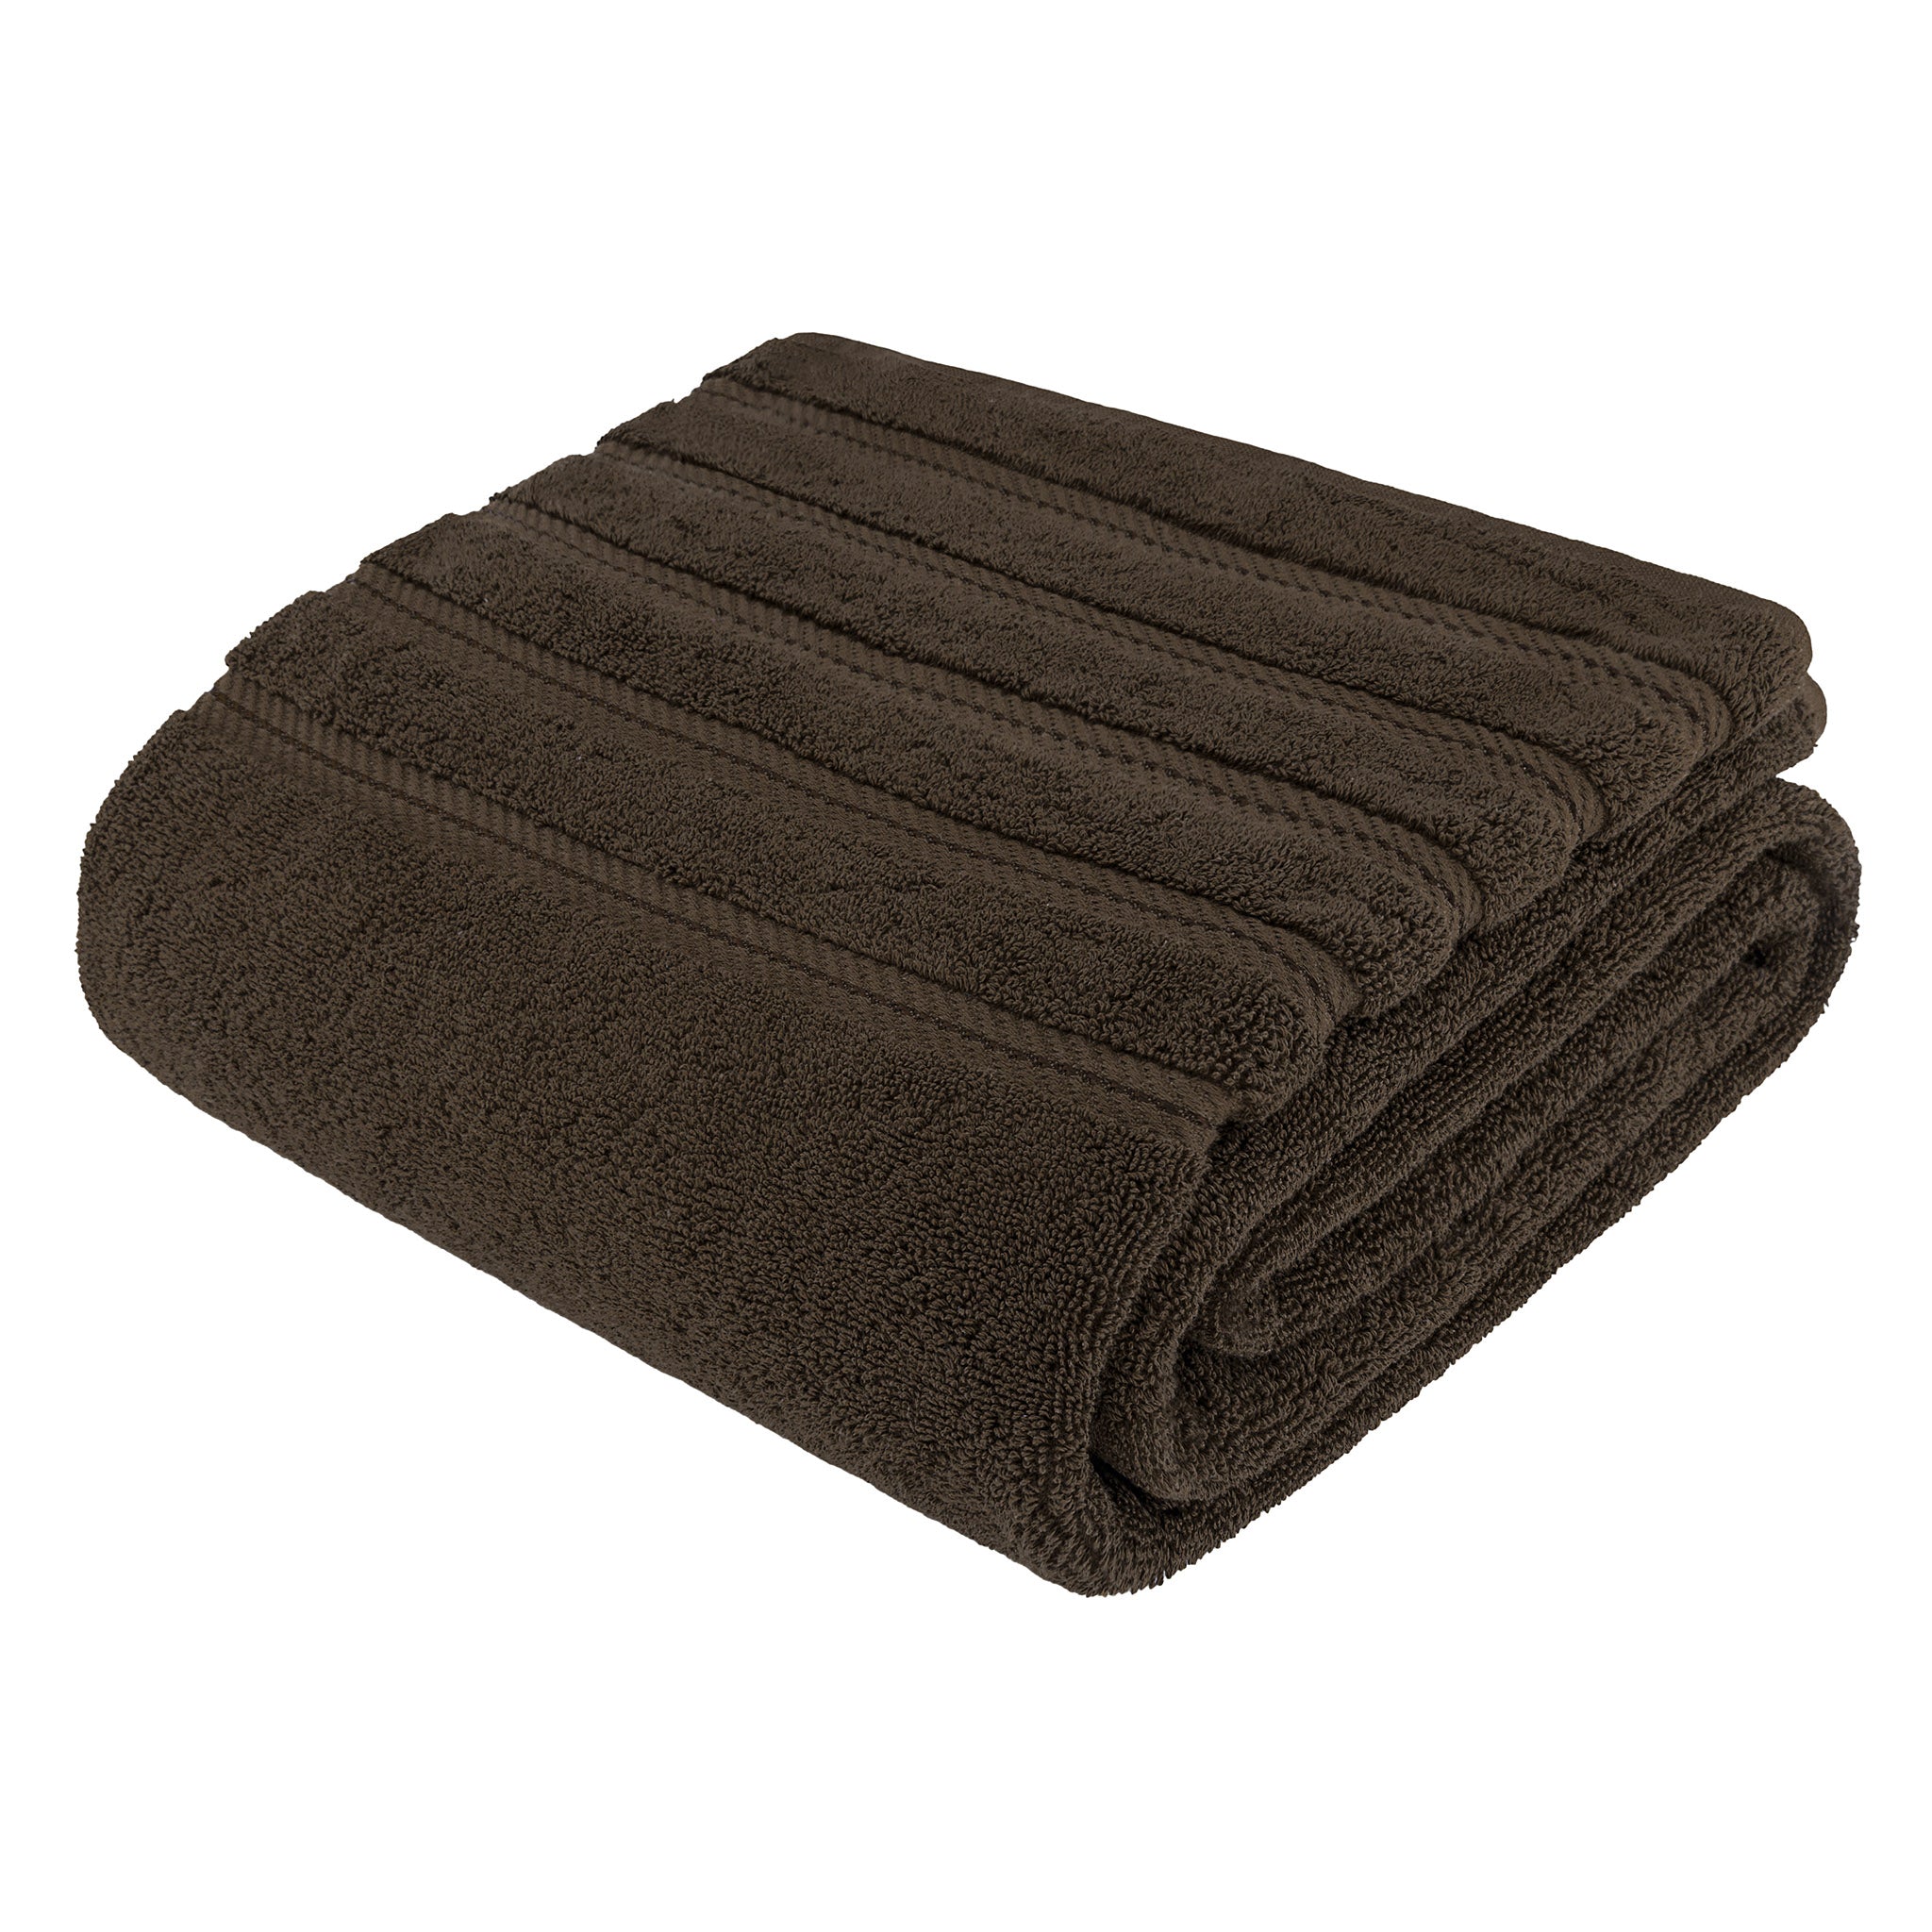 American Soft Linen Bath Sheet 35x70 inch 100% Turkish Cotton Bath Towel Sheets - Chocolate Brown, Size: Jumbo Bath Sheet 35x70